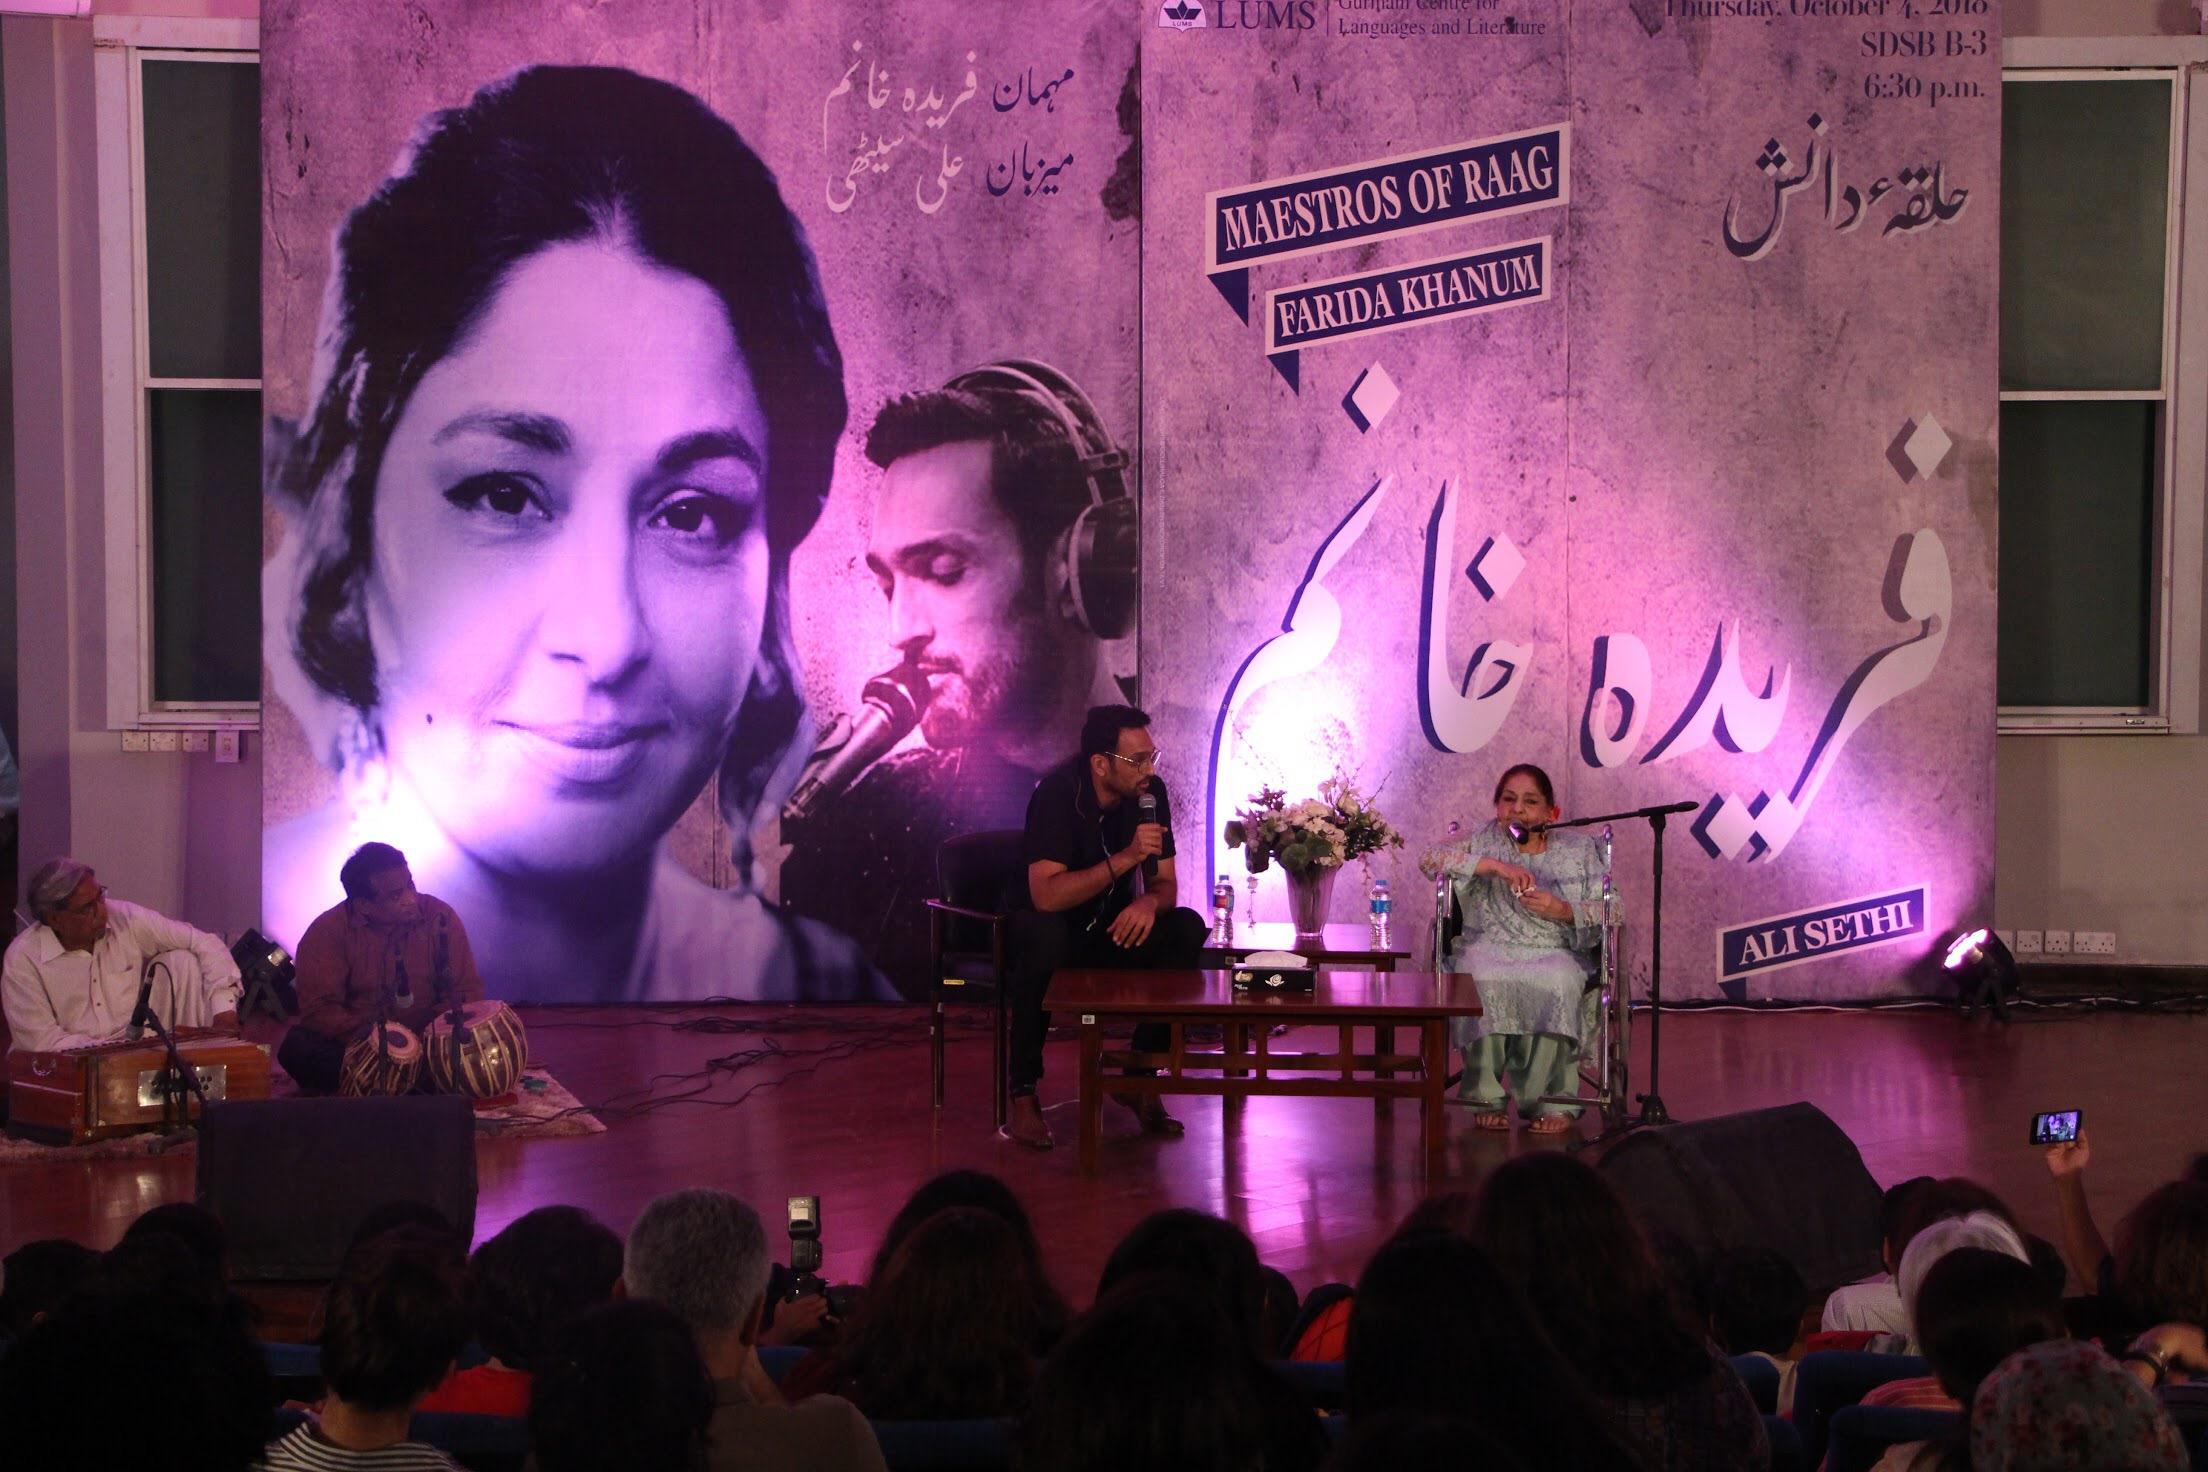 Yūnhī pehlū meiñ’ an Evening with Farida Khanum and Ali Sethi at LUMS